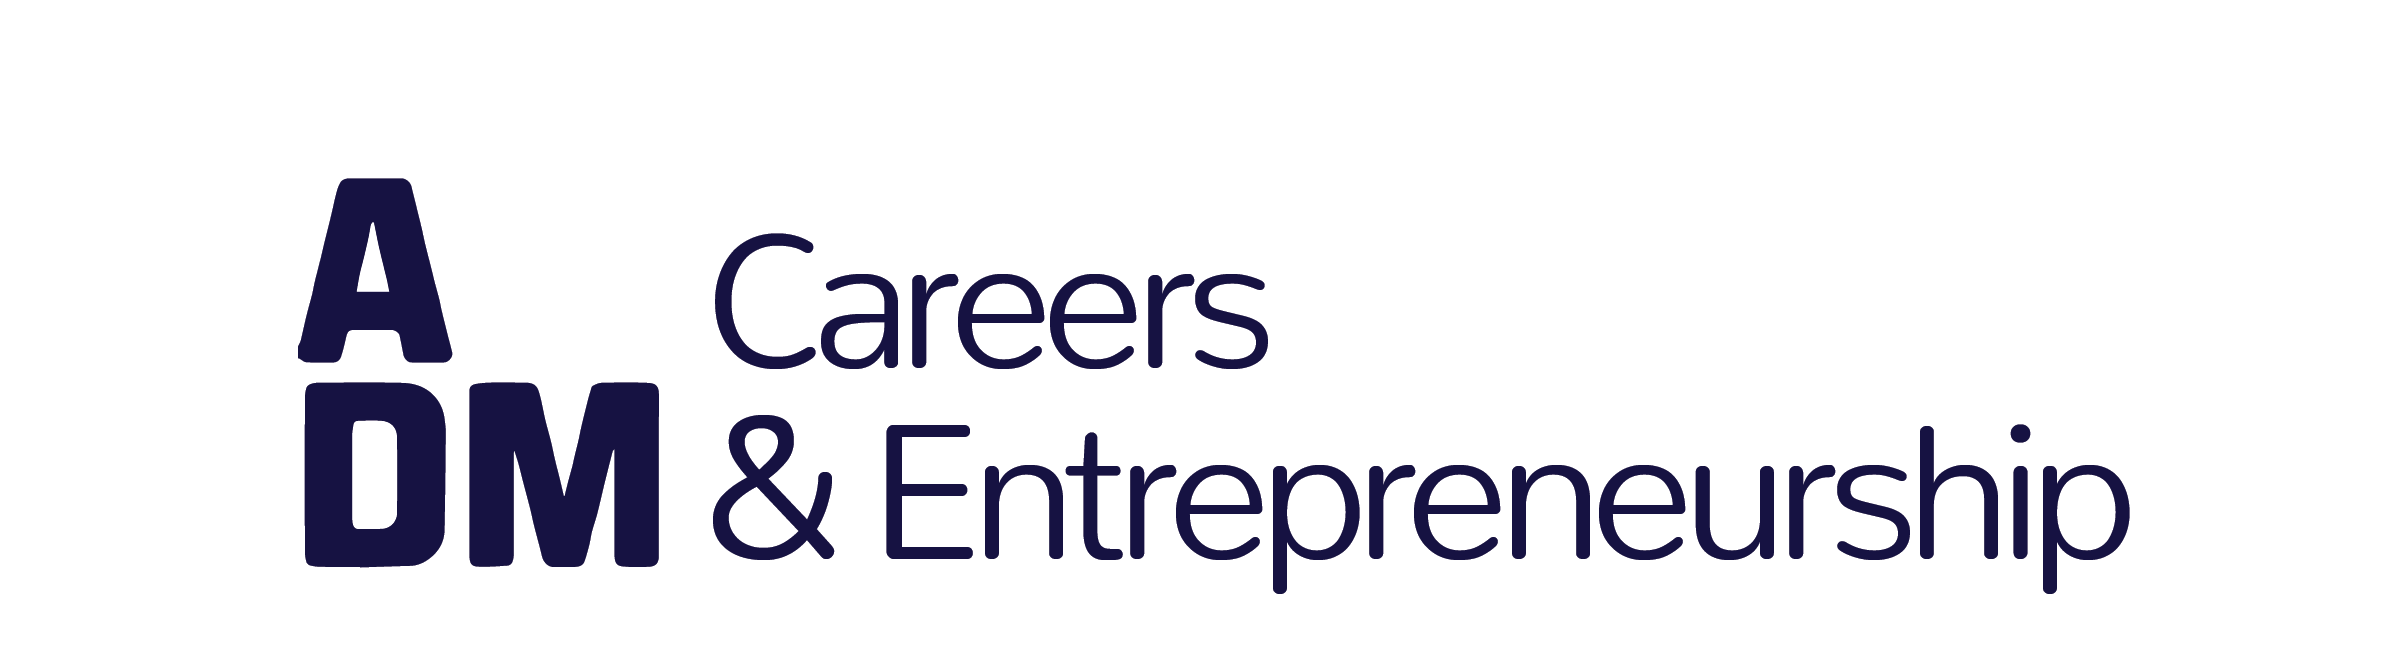 ADM Careers and Entrepreneurship